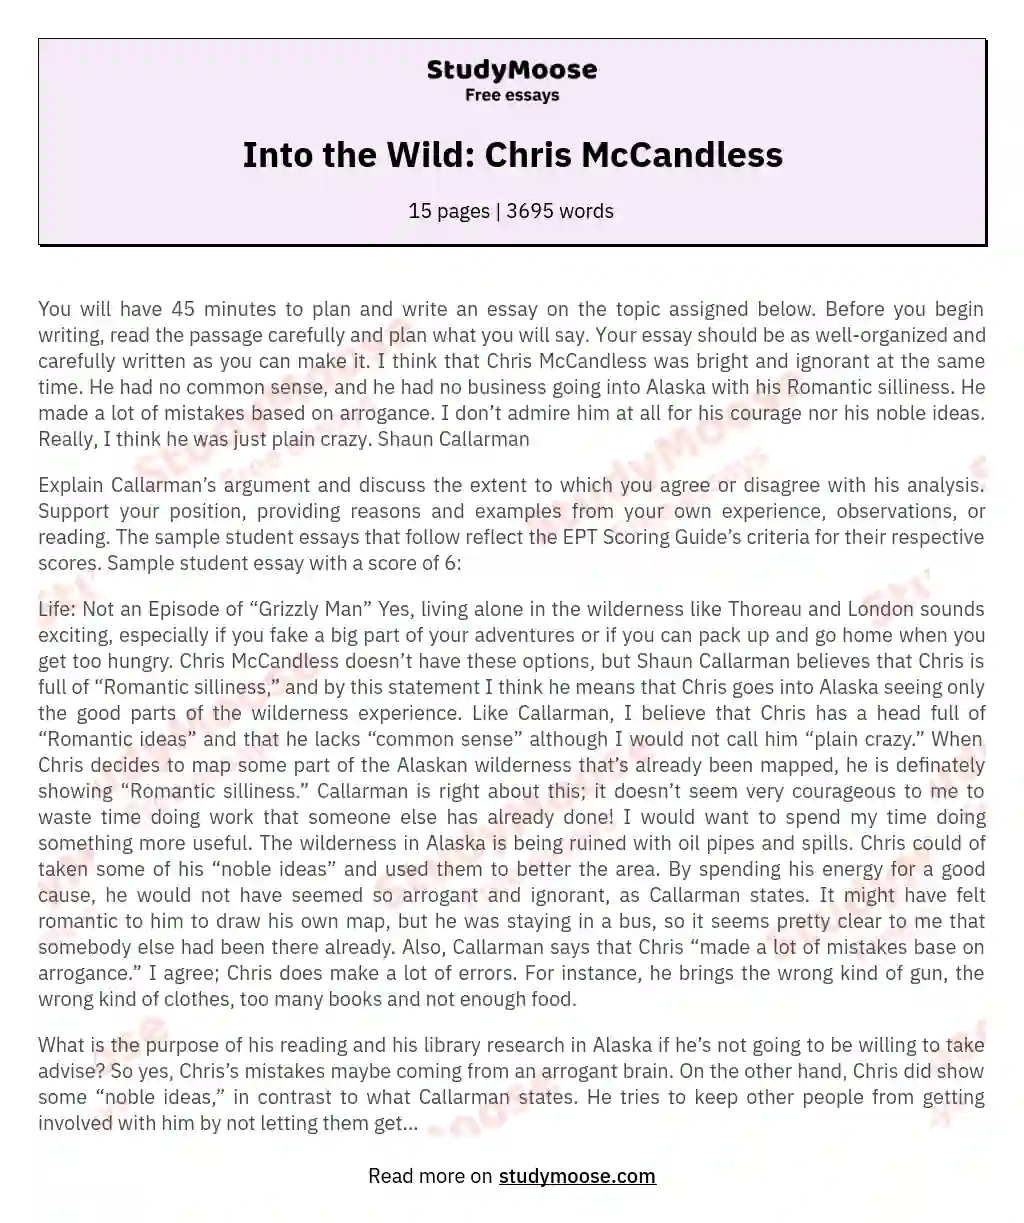 Into the Wild: Chris McCandless